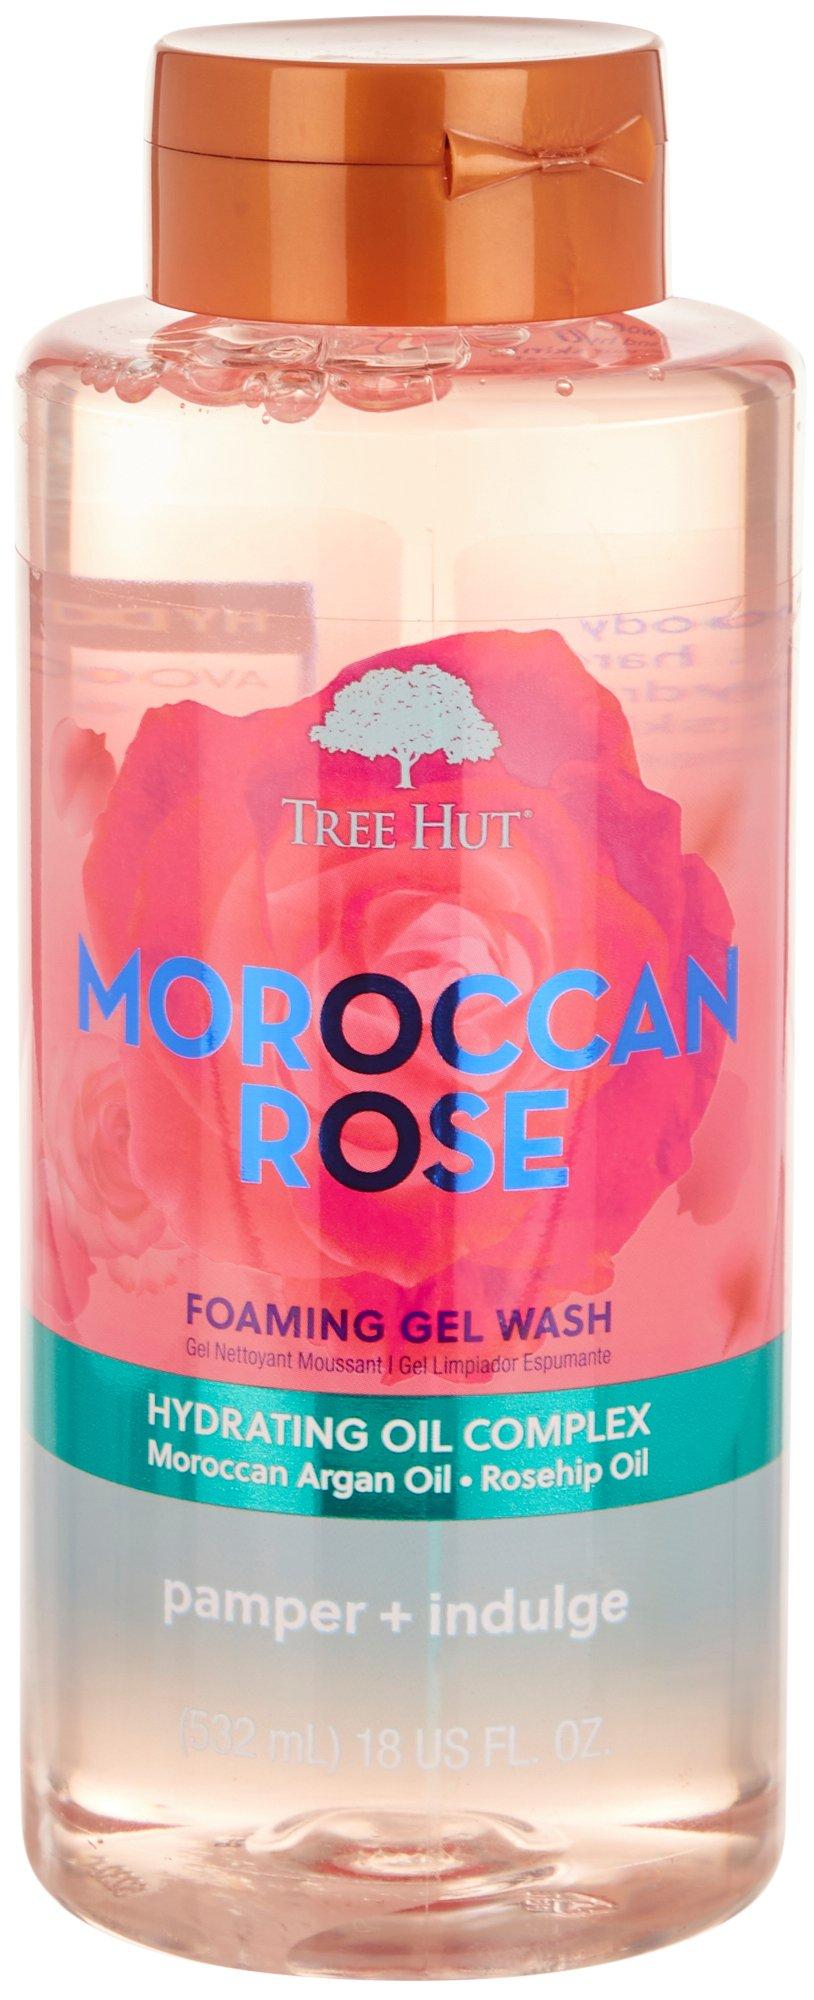 Tree Hut 18 Fl.Oz. Moroccan Rose Foaming Gel